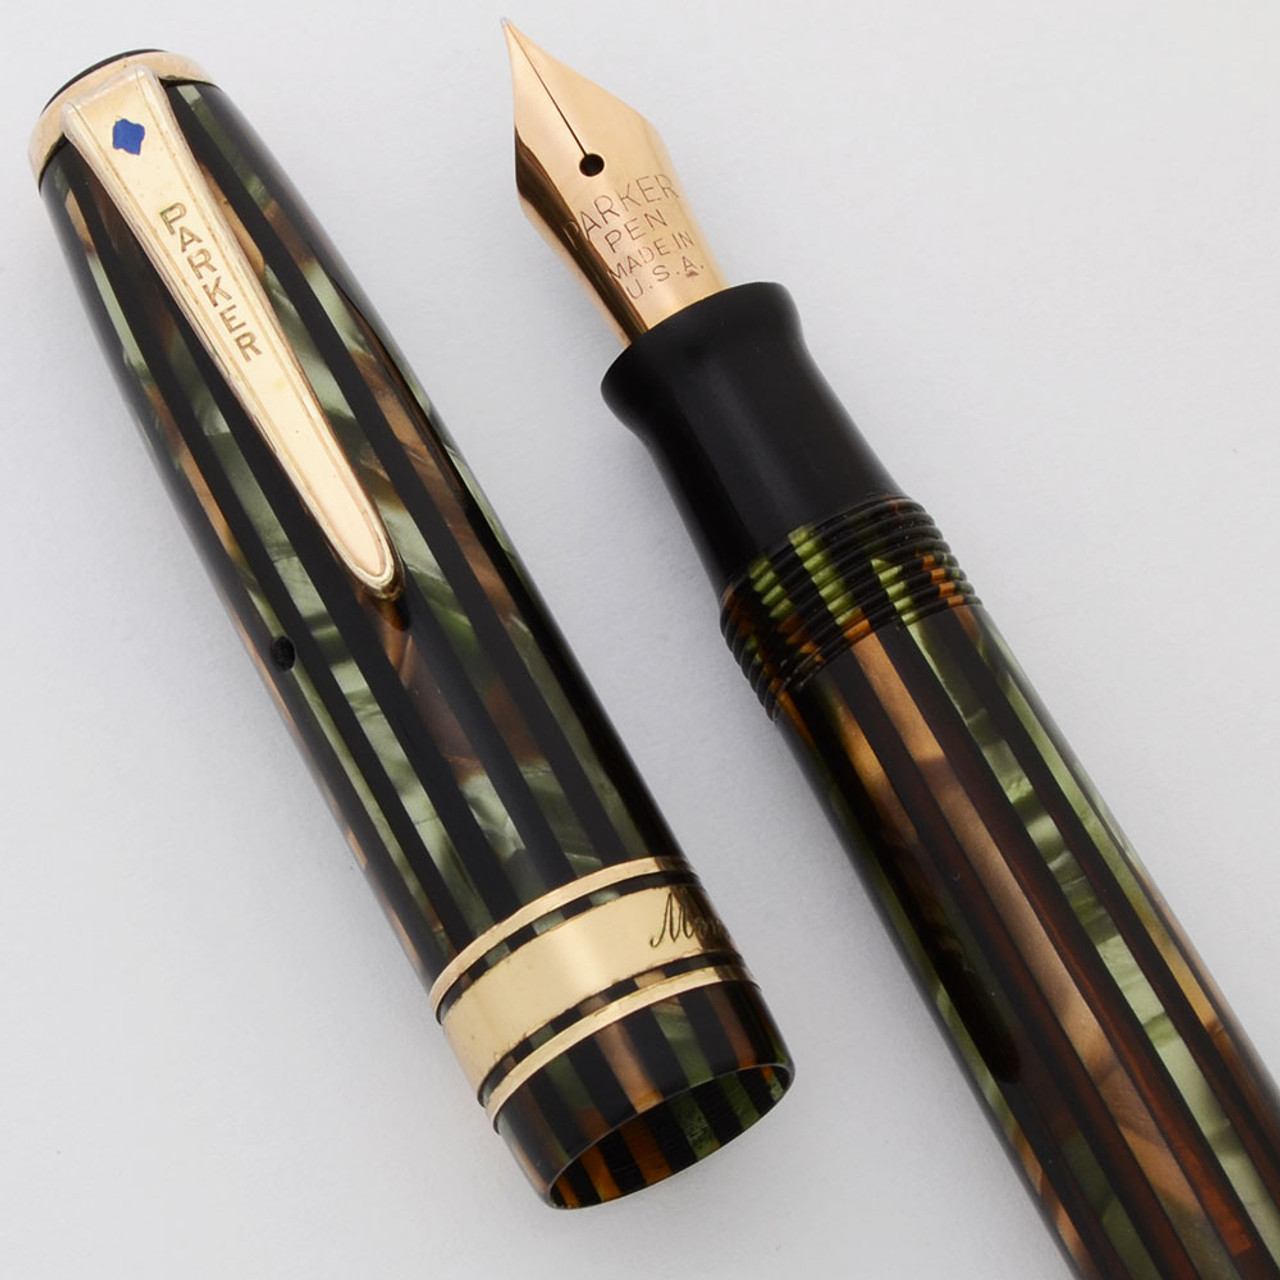 Parker Striped Duofold Ingenue Fountain Pen (1940) - Vacumatic, Green Stripe, Extra-Fine Nib (Excellent, Restored)